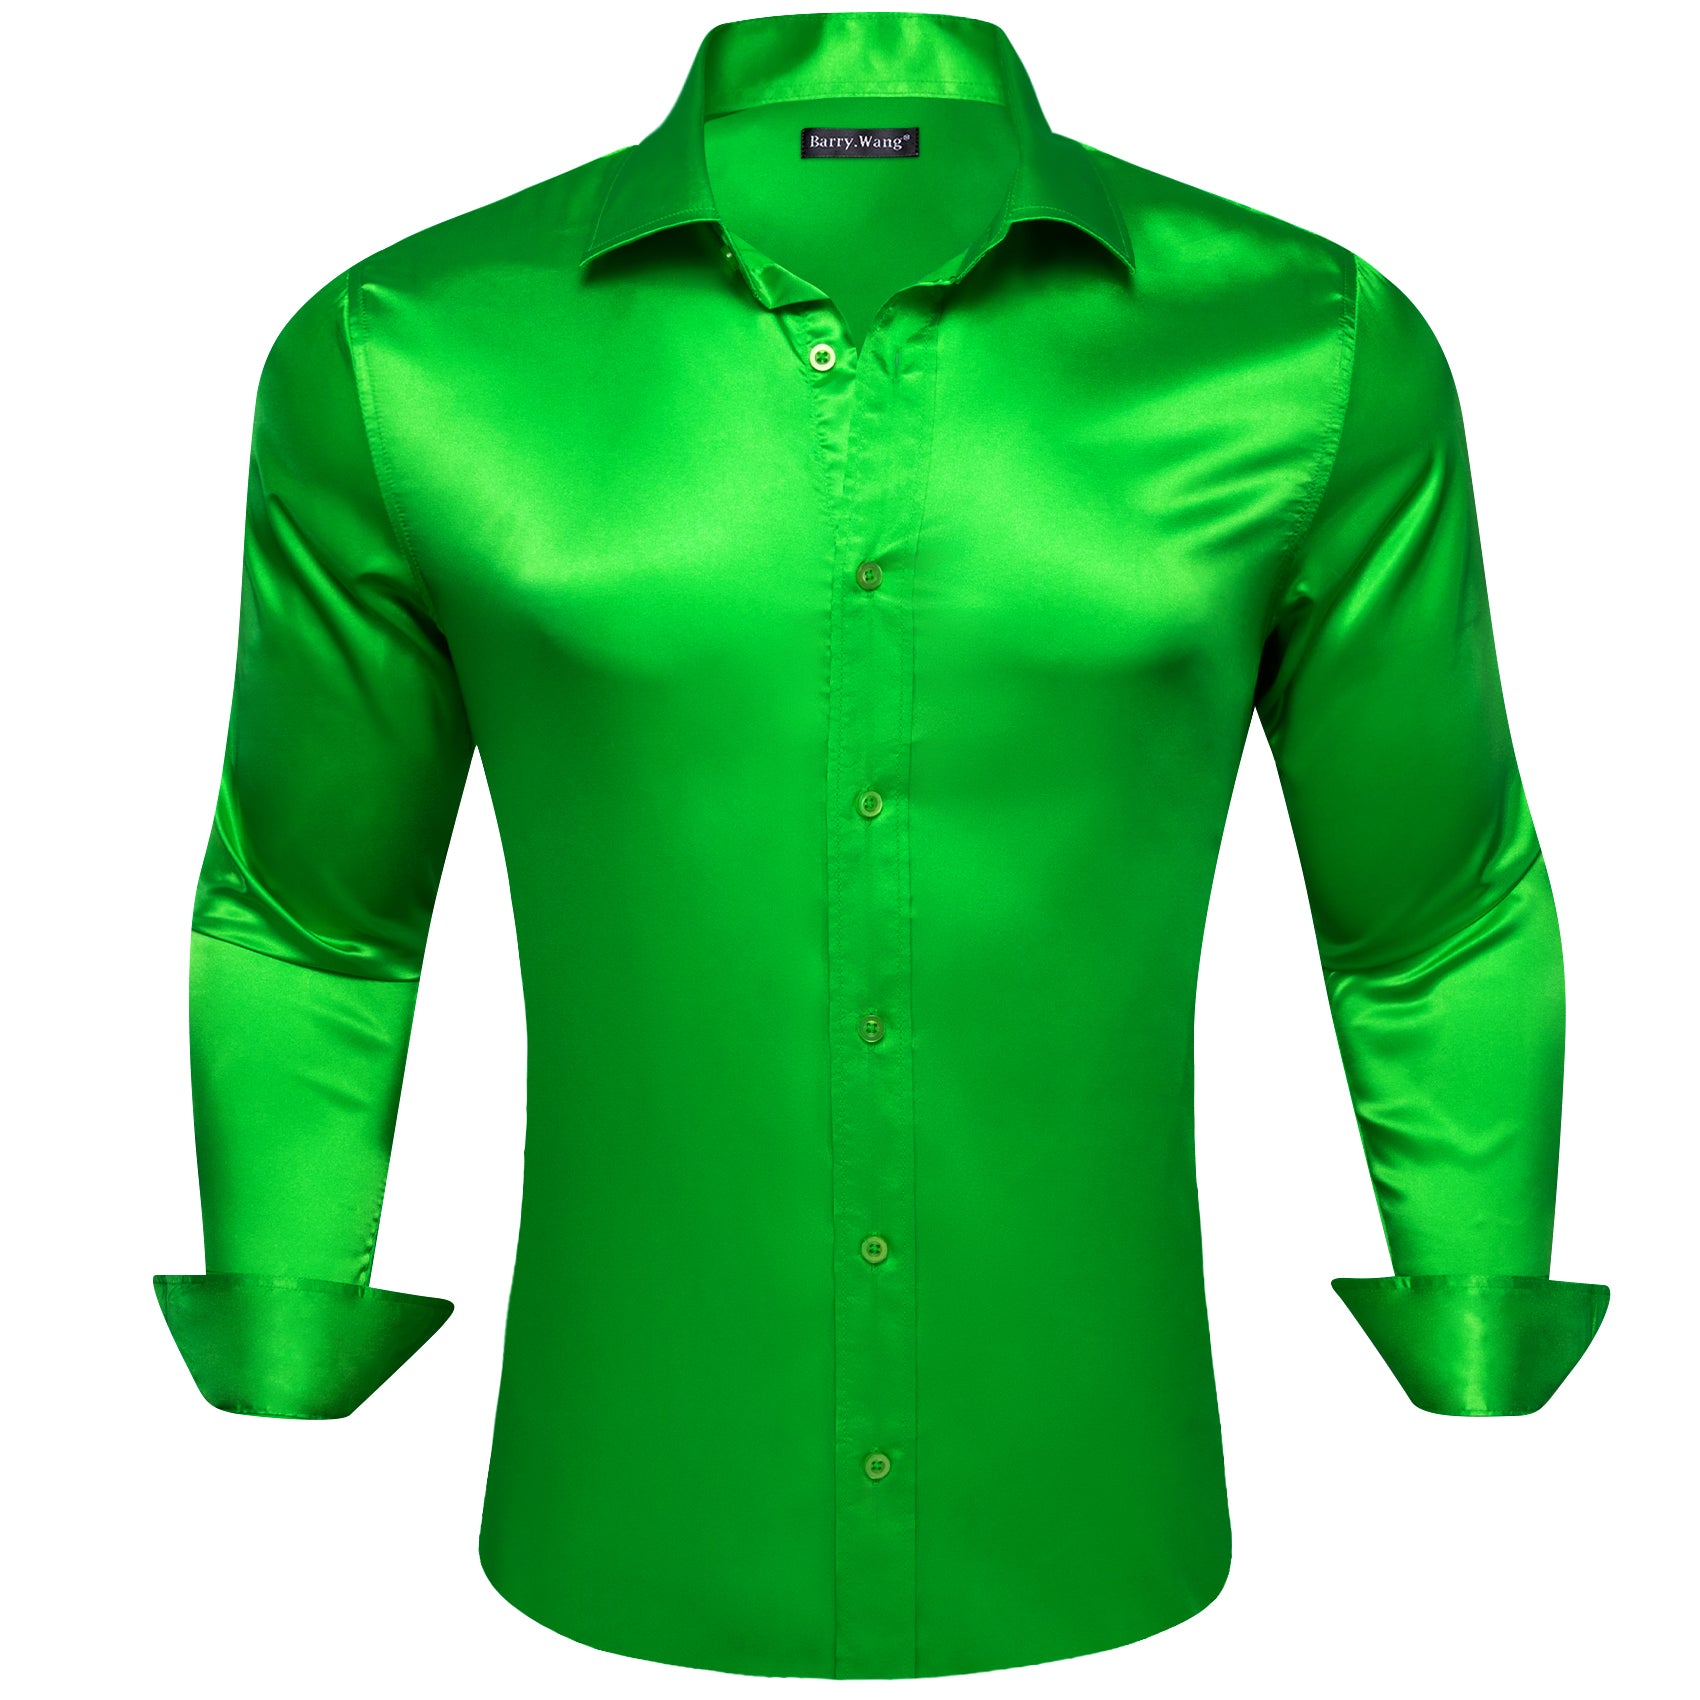 Barry.wang Button Down Shirt Lime Green Solid Silk Long Sleeve Shirt